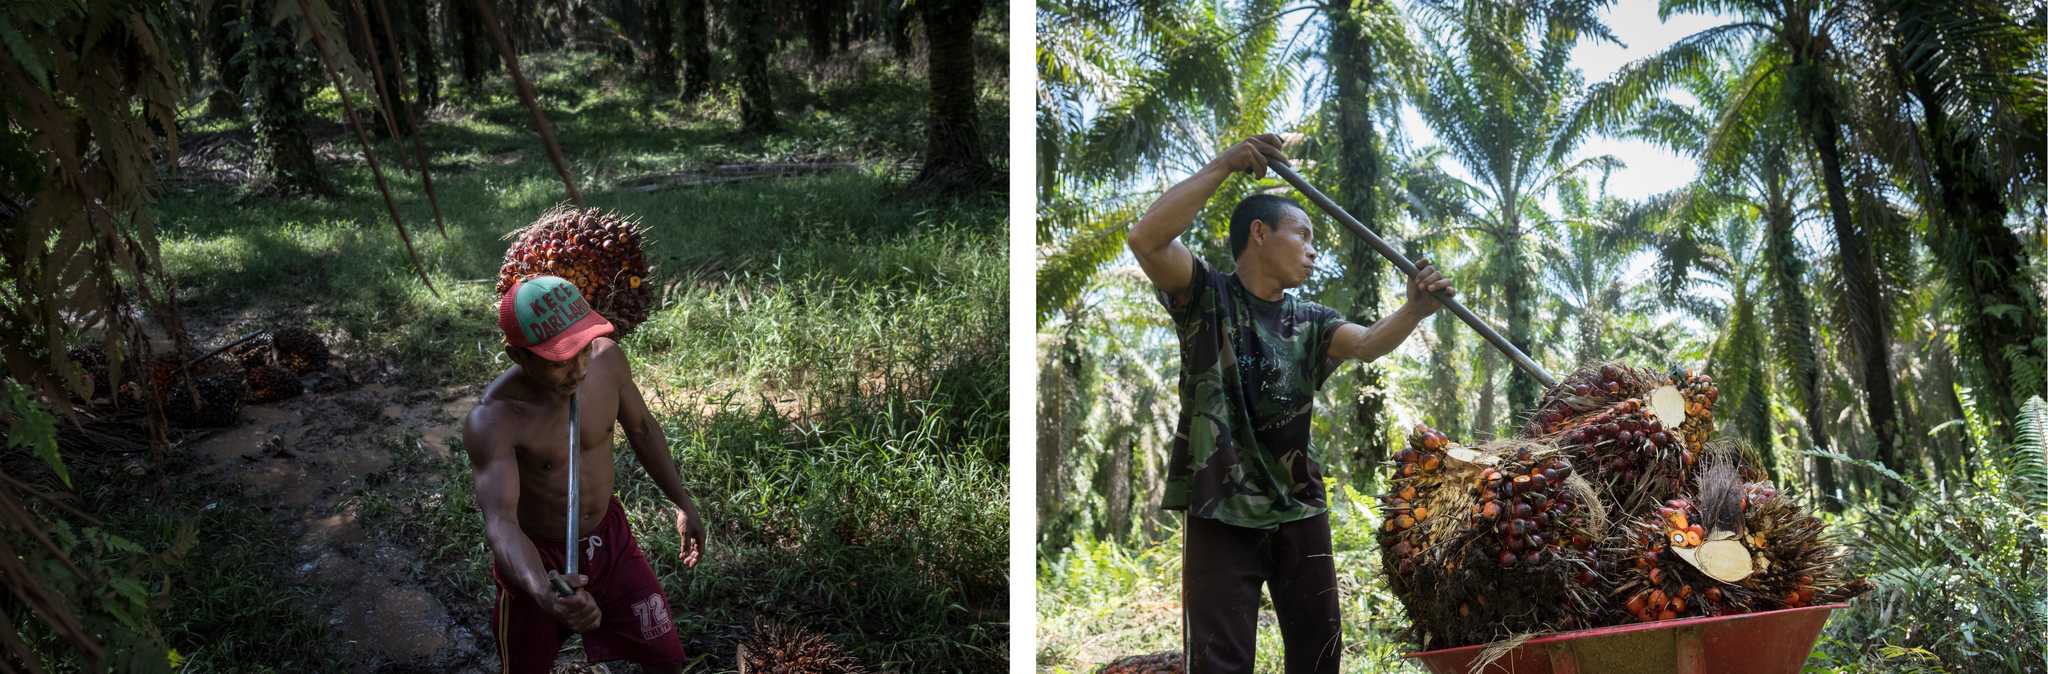 Suhandri (left) harvests palm oil in a community-owned oil palm plantation in Bina Karya village, South Sumatra. Azari (right) works as a labourer in London Sumatra’s plantation in Tebing Tinggi.